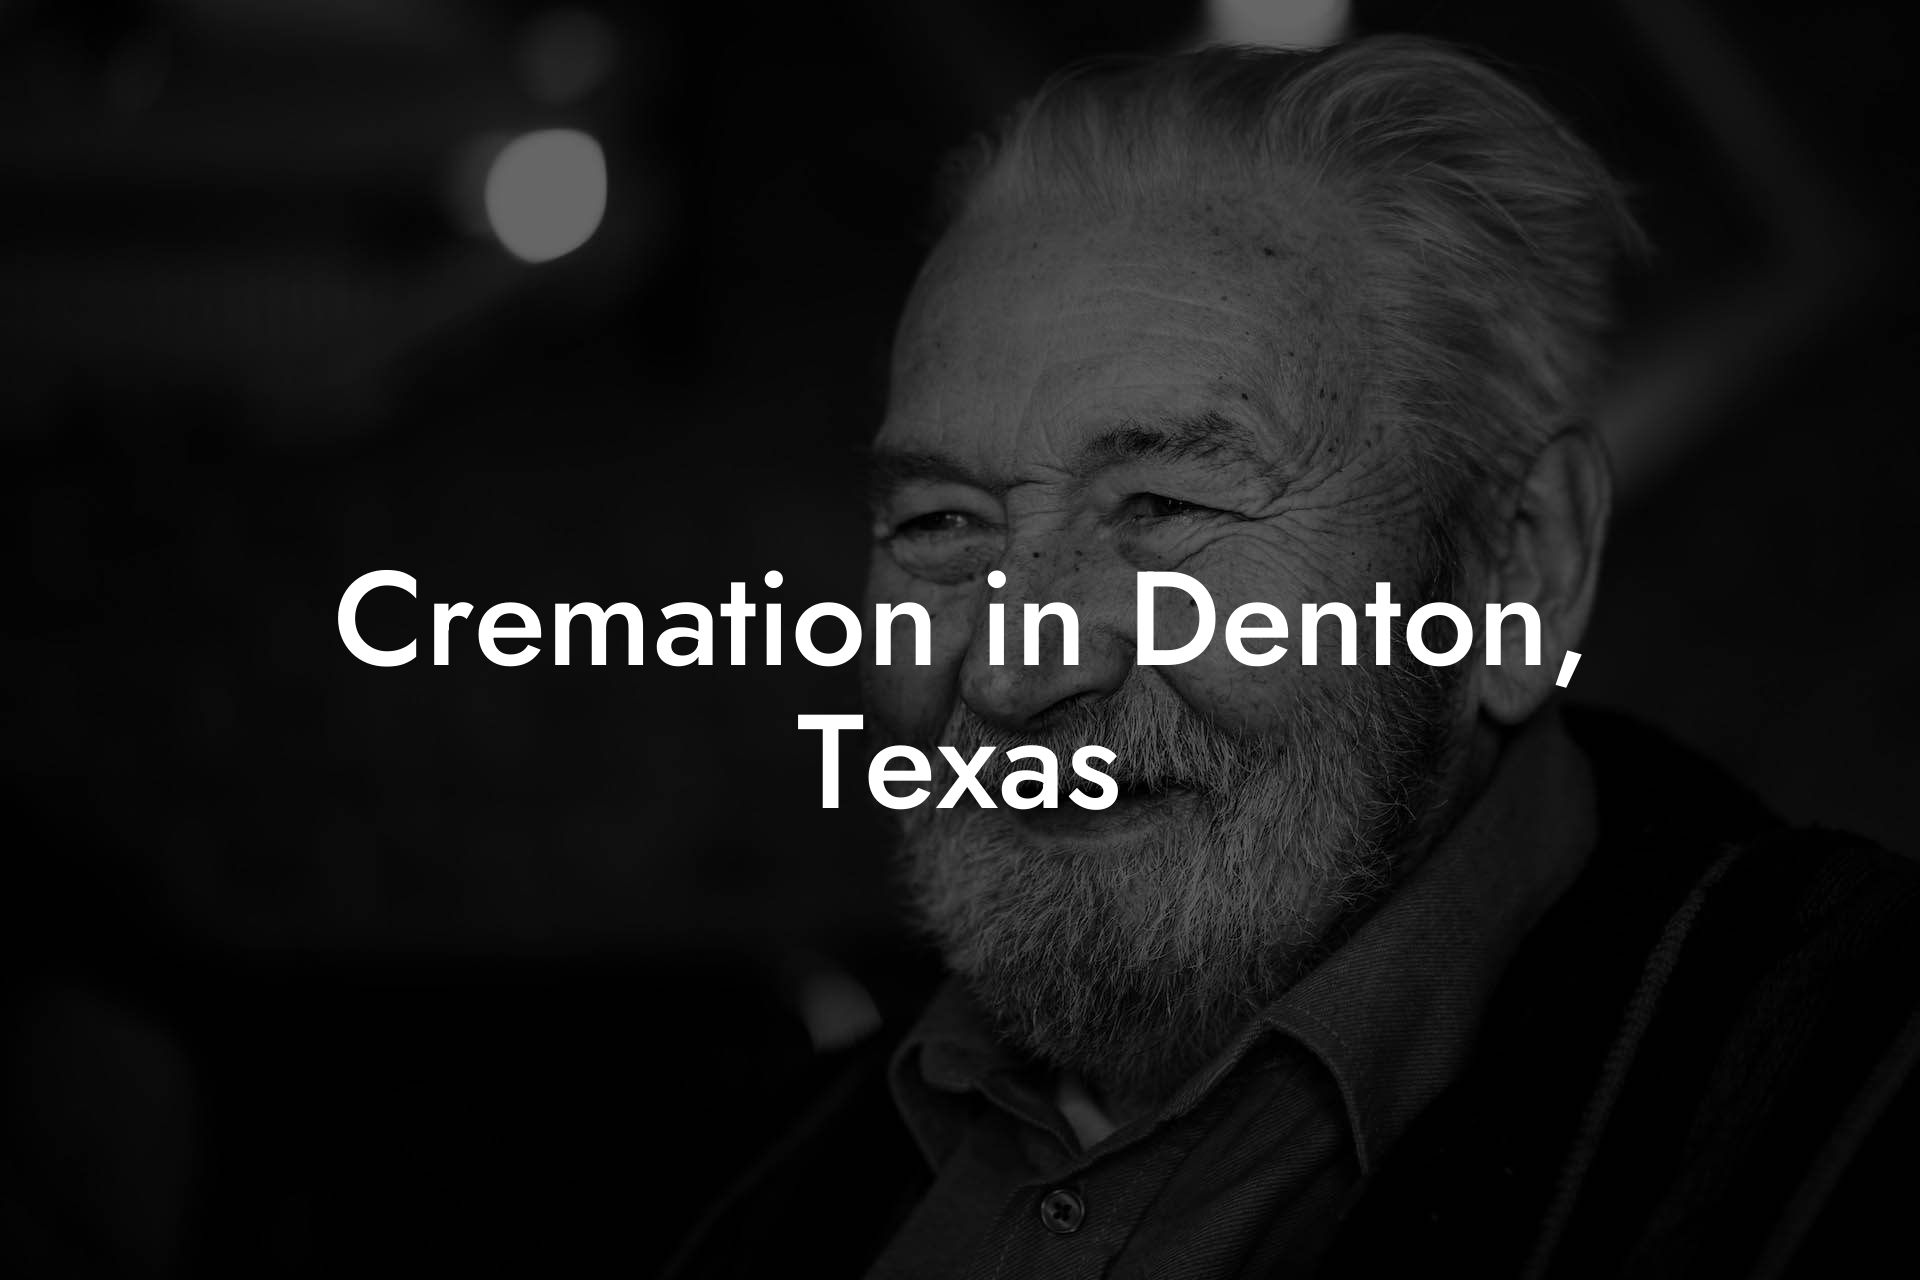 Cremation in Denton, Texas